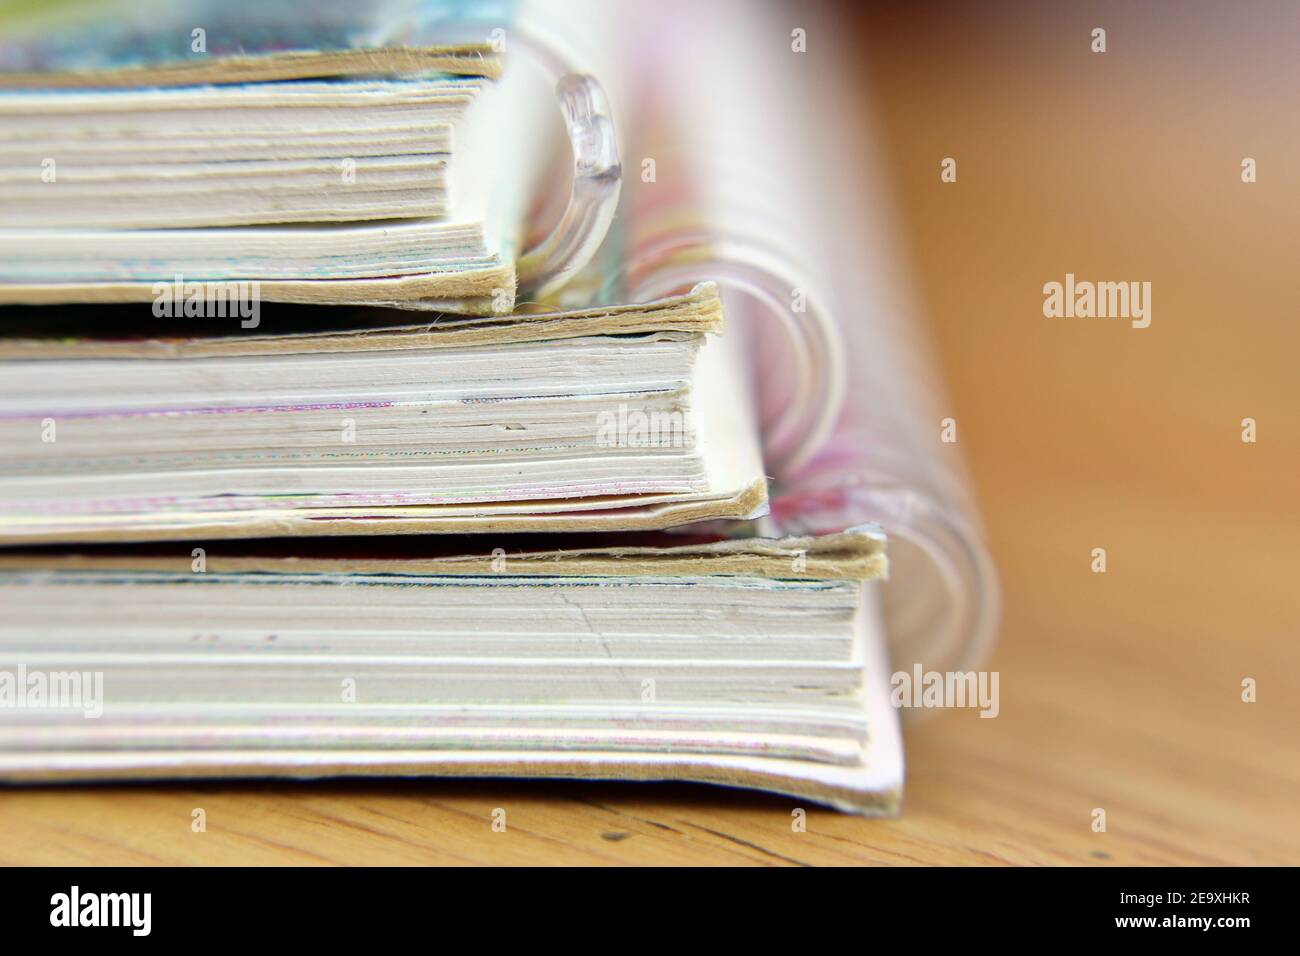 Spiral binder, three notebooks in the foreground, desk background Stock Photo